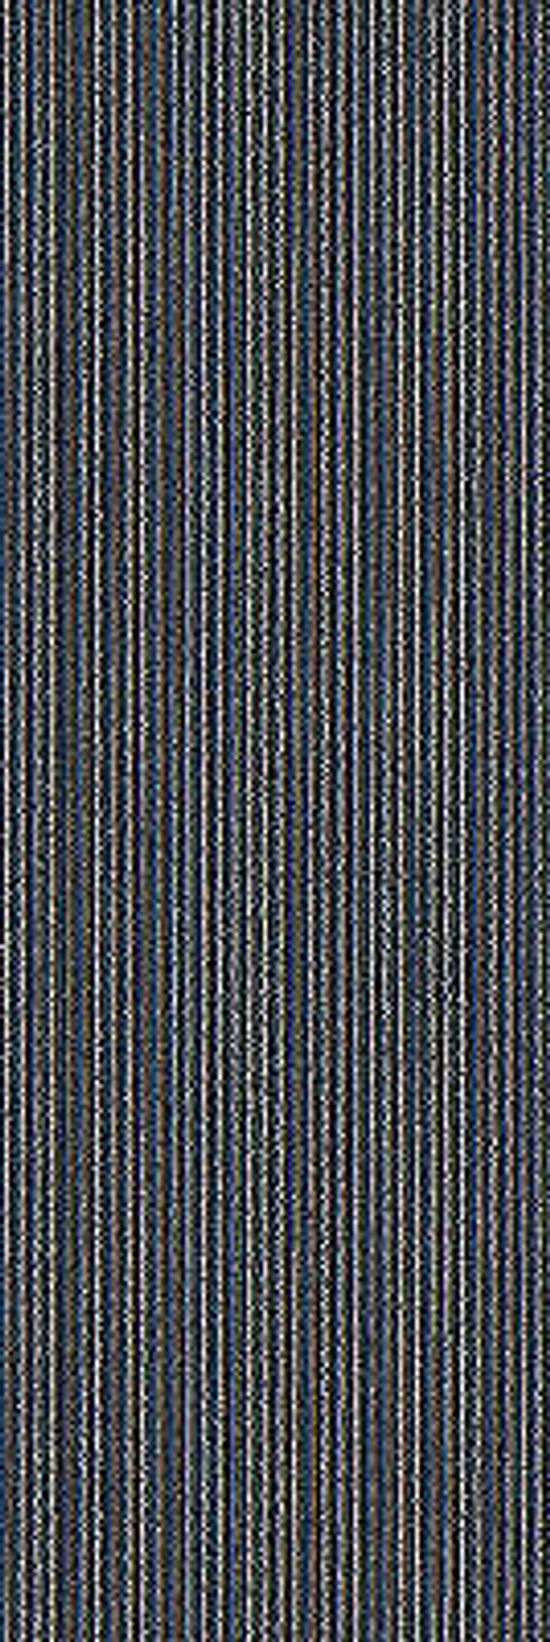 Carpet Tile Complex Reasoning Perception 12" x 36"